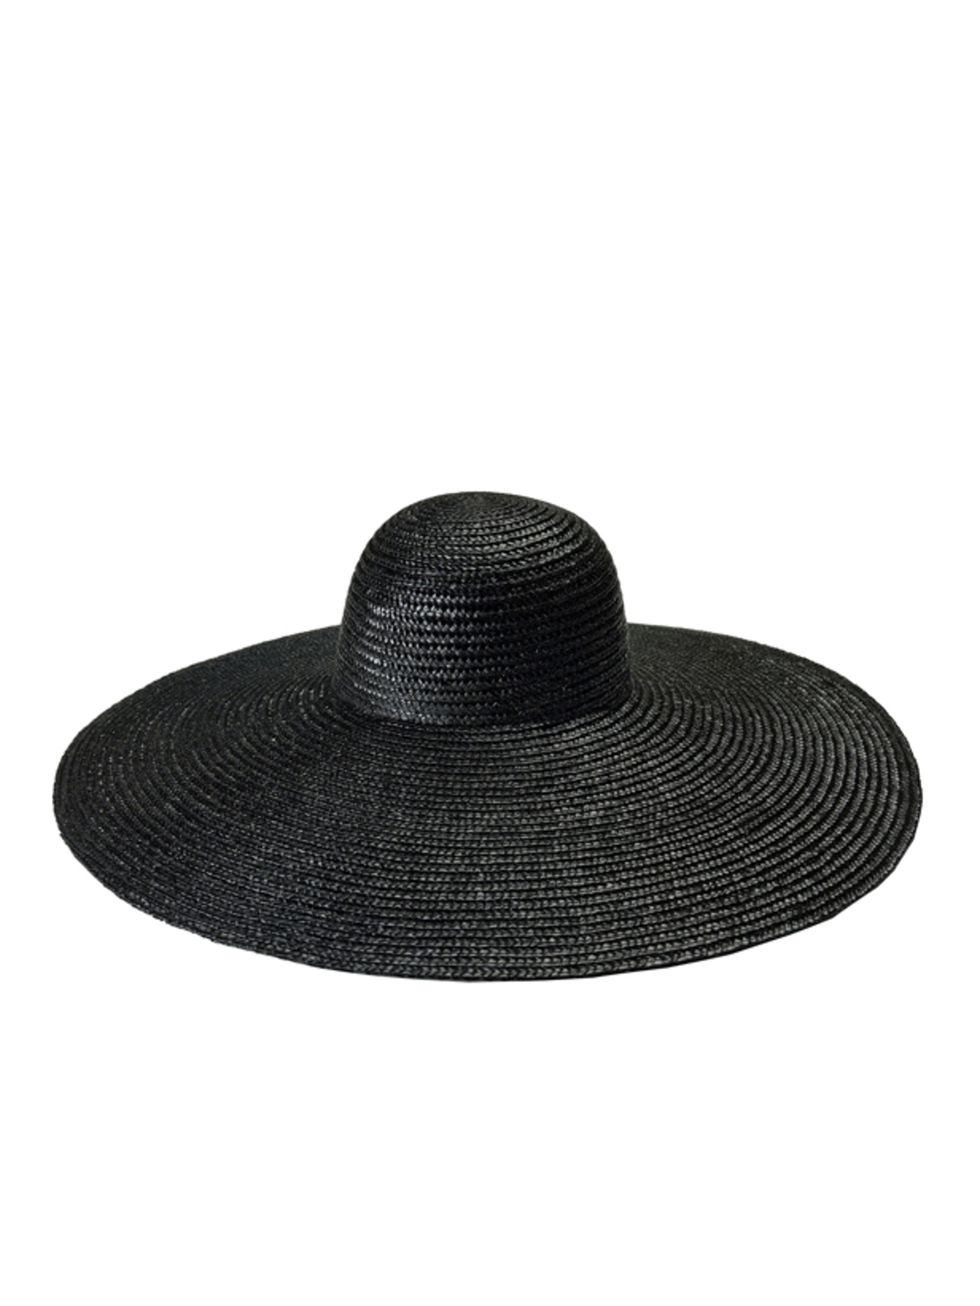 <p><a href="http://www.zara.com/webapp/wcs/stores/servlet/product/uk/en/zara-S2011/61148/311009/WIDE%2BBRIMMED%2BHAT">Zara</a> wide brimmed hat, £25.99</p>